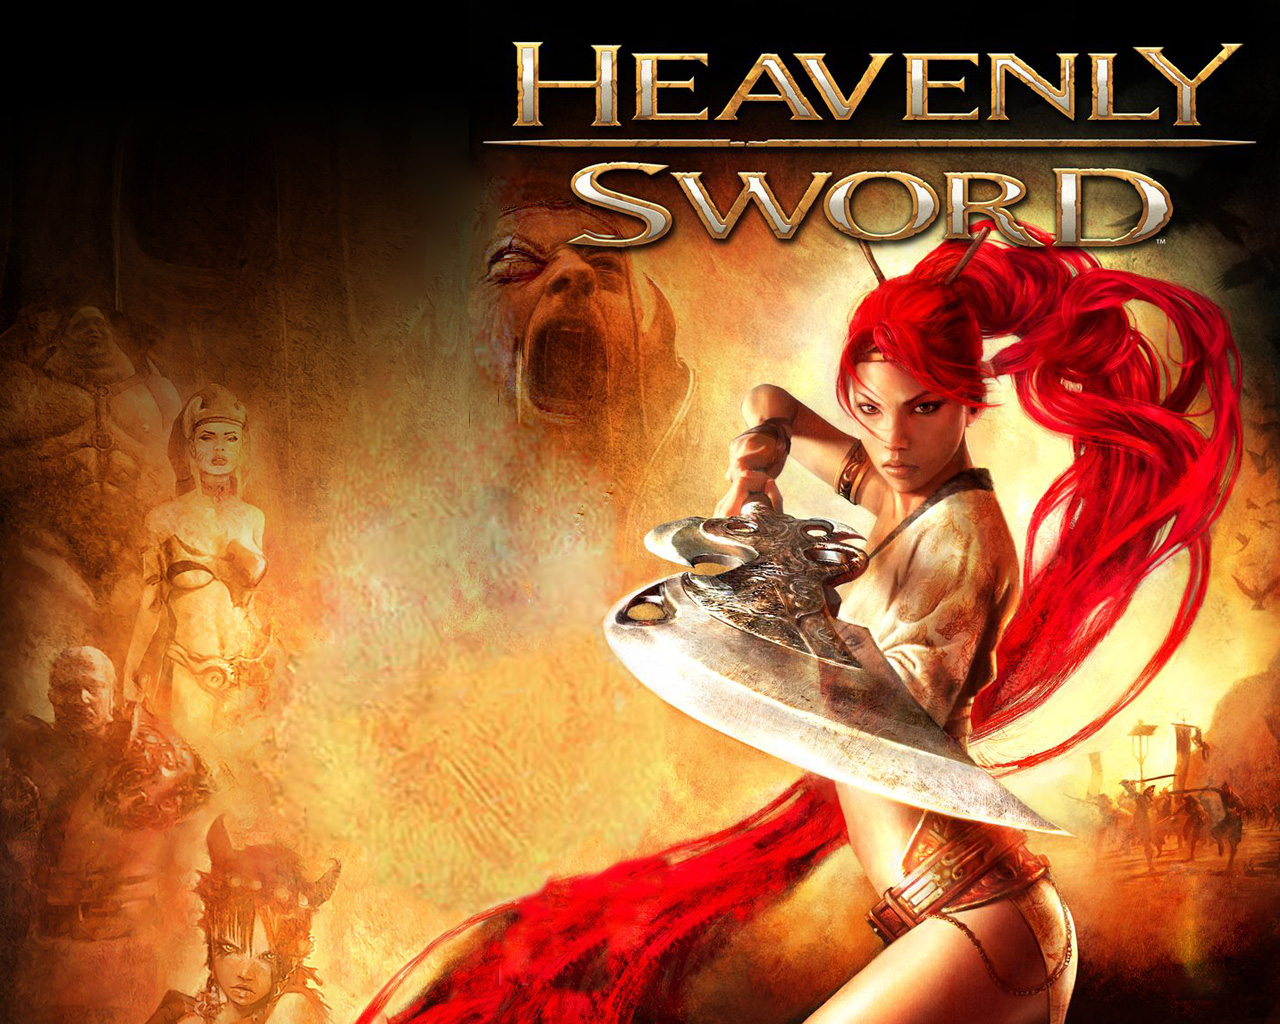 Heavenly Sword Game Wallpaper Gallery Image